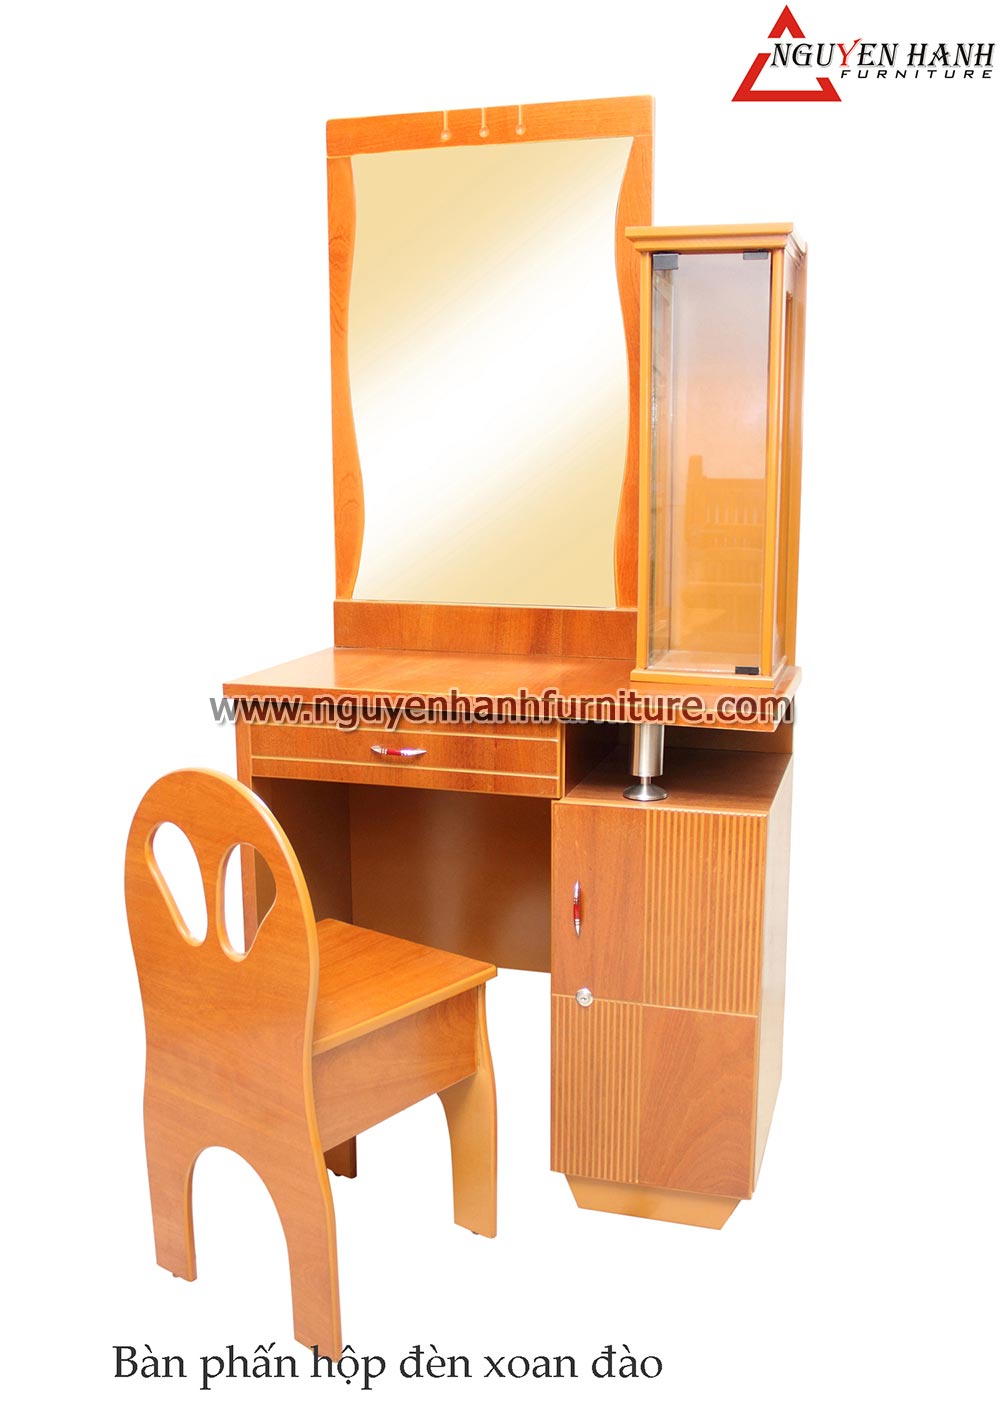 Name product: Light box style Makeup Desk of Bead-tree wood - Dimensions: 80 x 45 x 157 - Description: Veneer bead tree wood